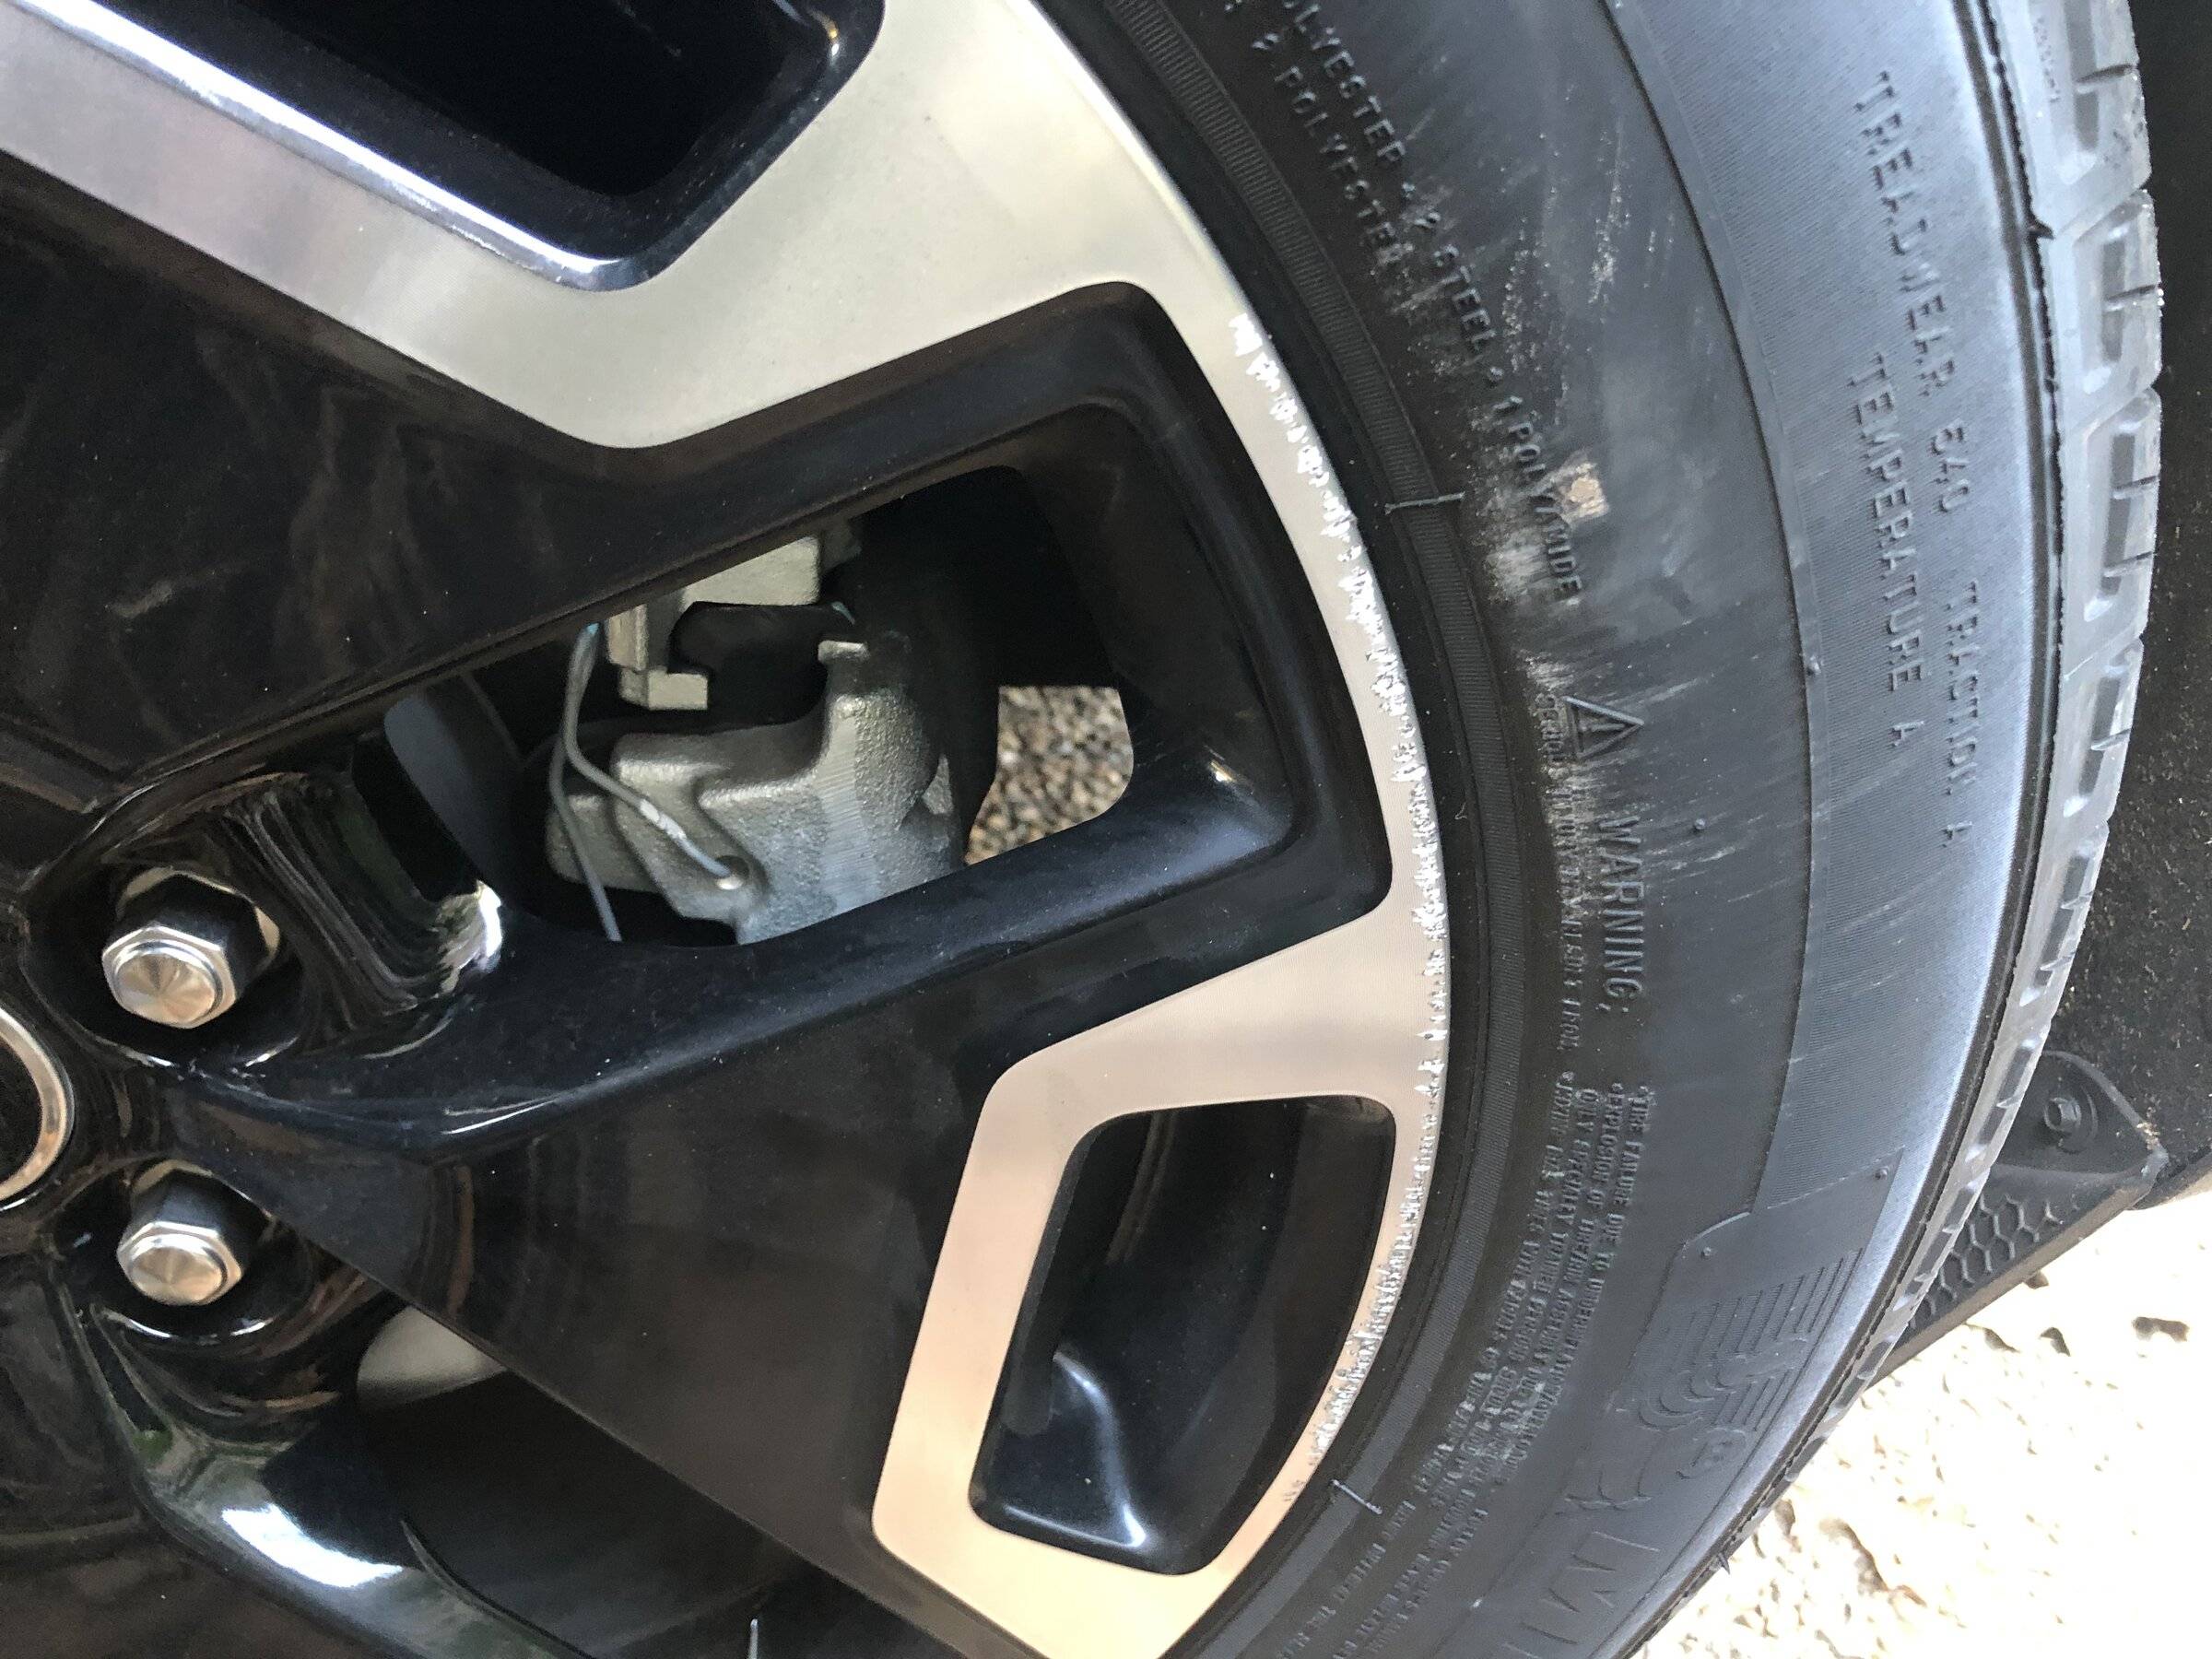 How Do I Repair A Curbed Wheel?